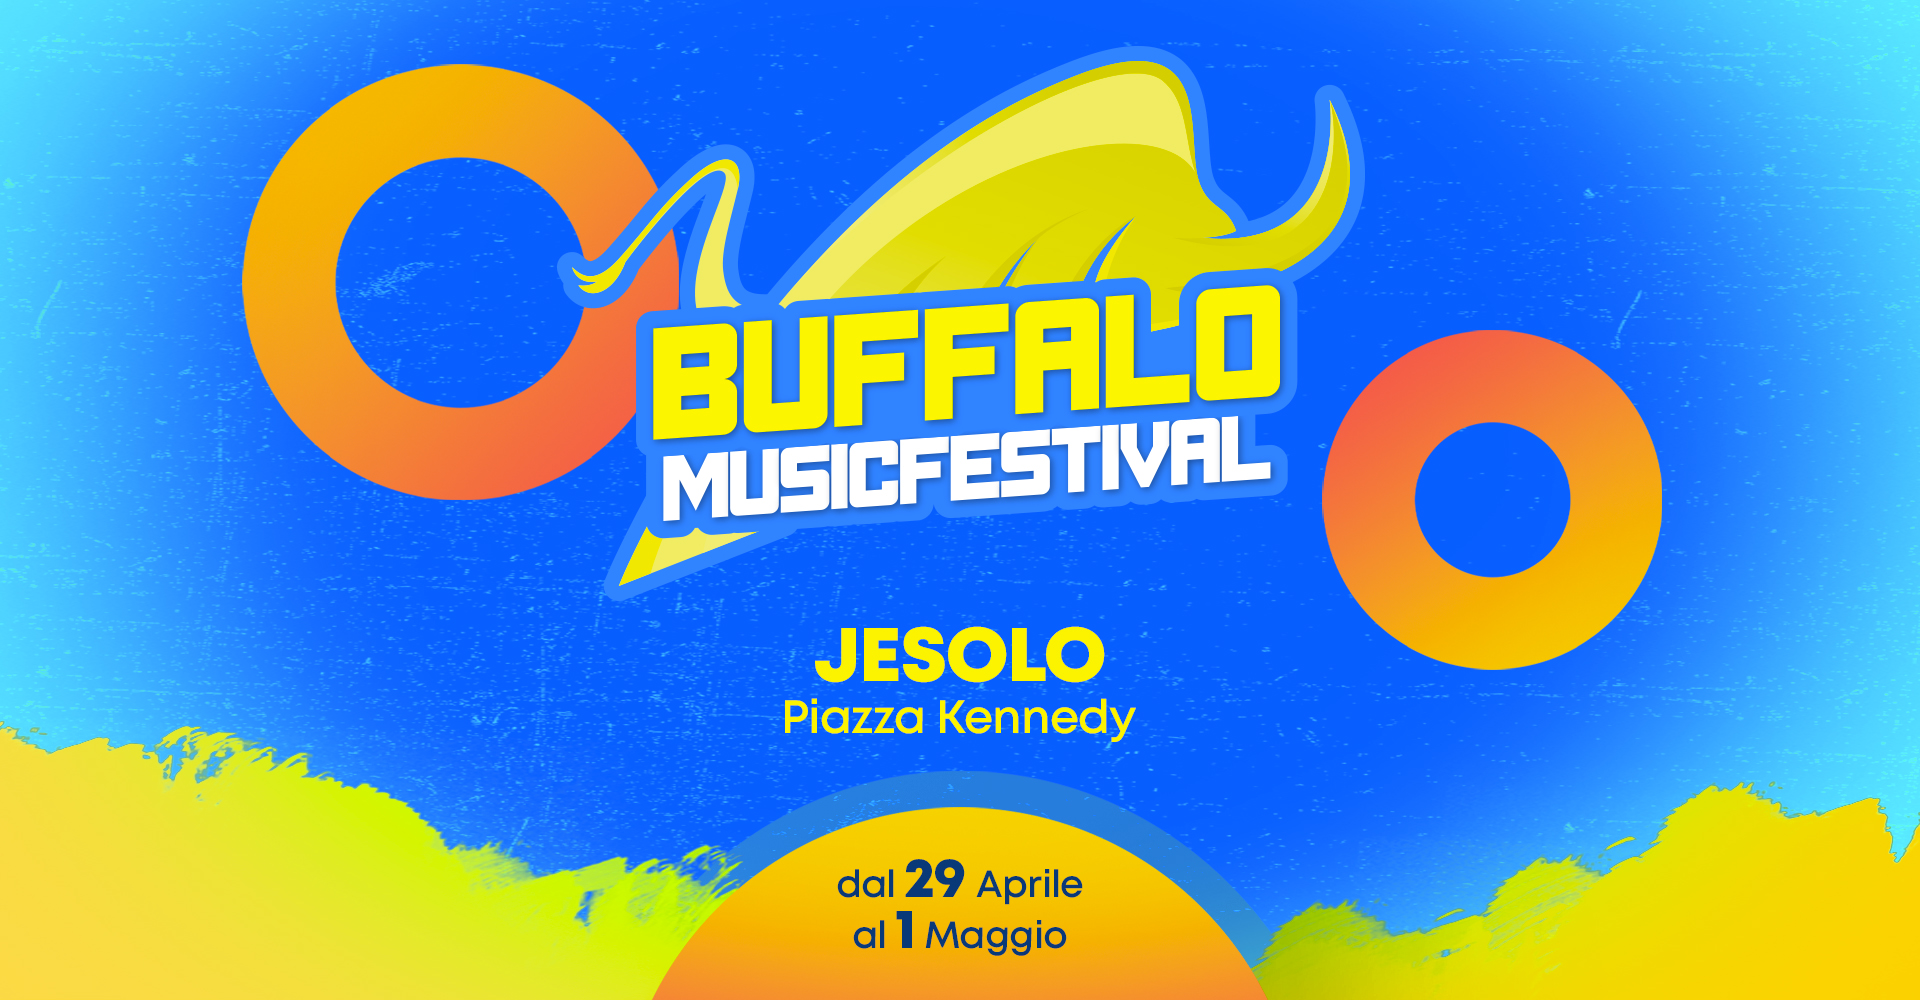 BUFFALO MUSIC FESTIVAL - JESOLO